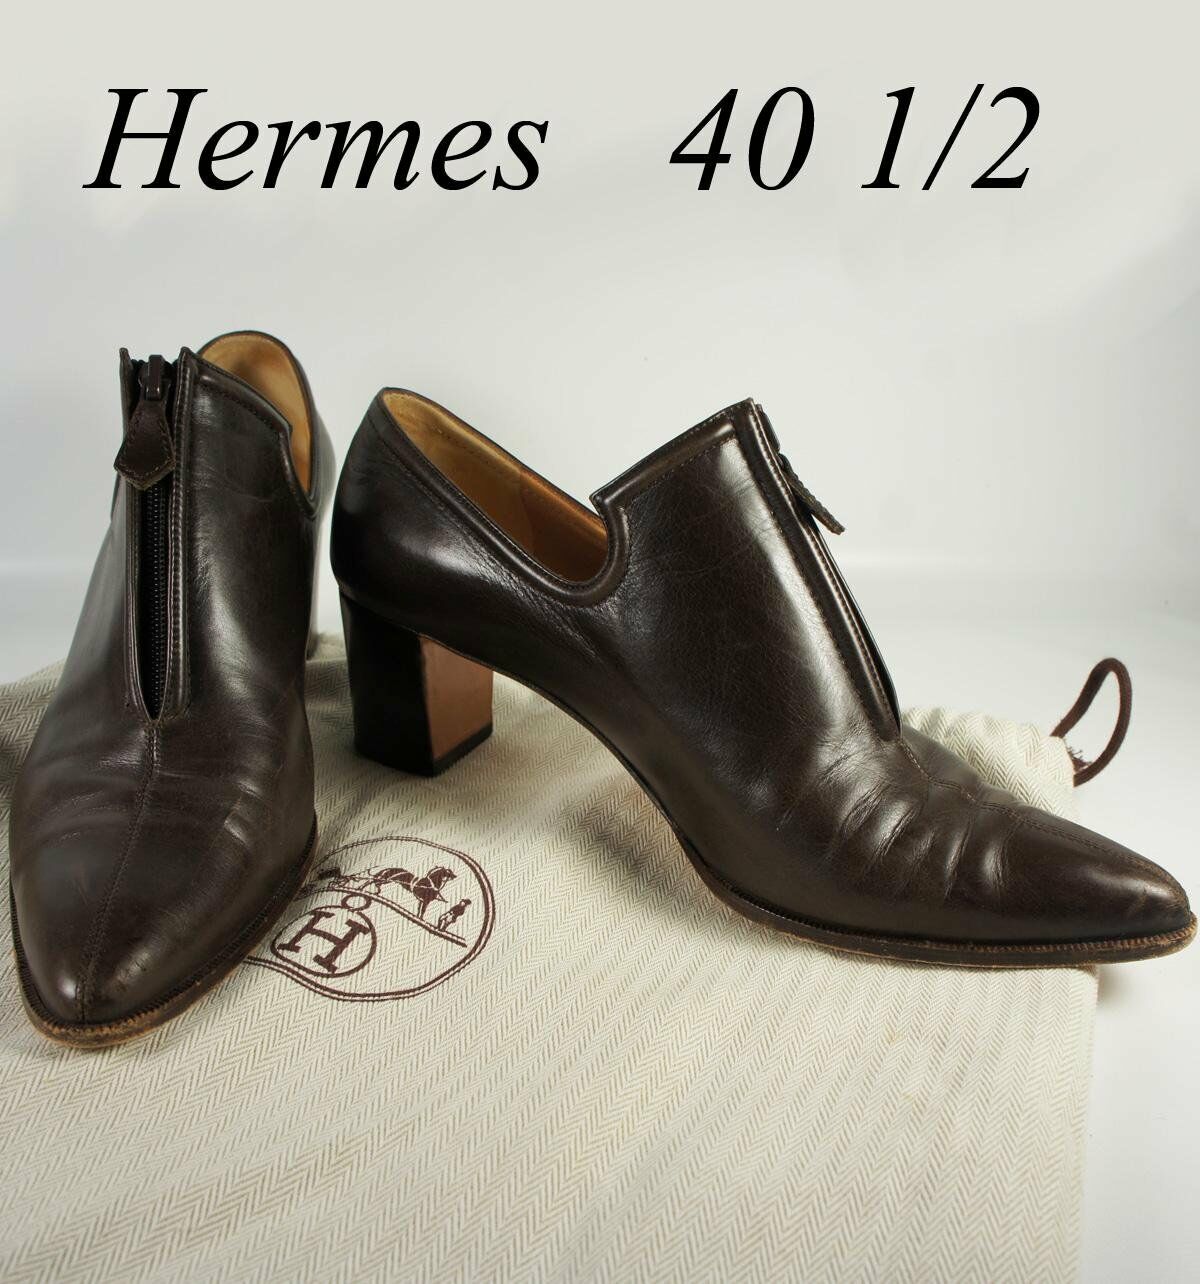 Hermes Low Ankle Boot, Booties, Dark Brown w 2" Heel, US 9.5, EU 40 1/2